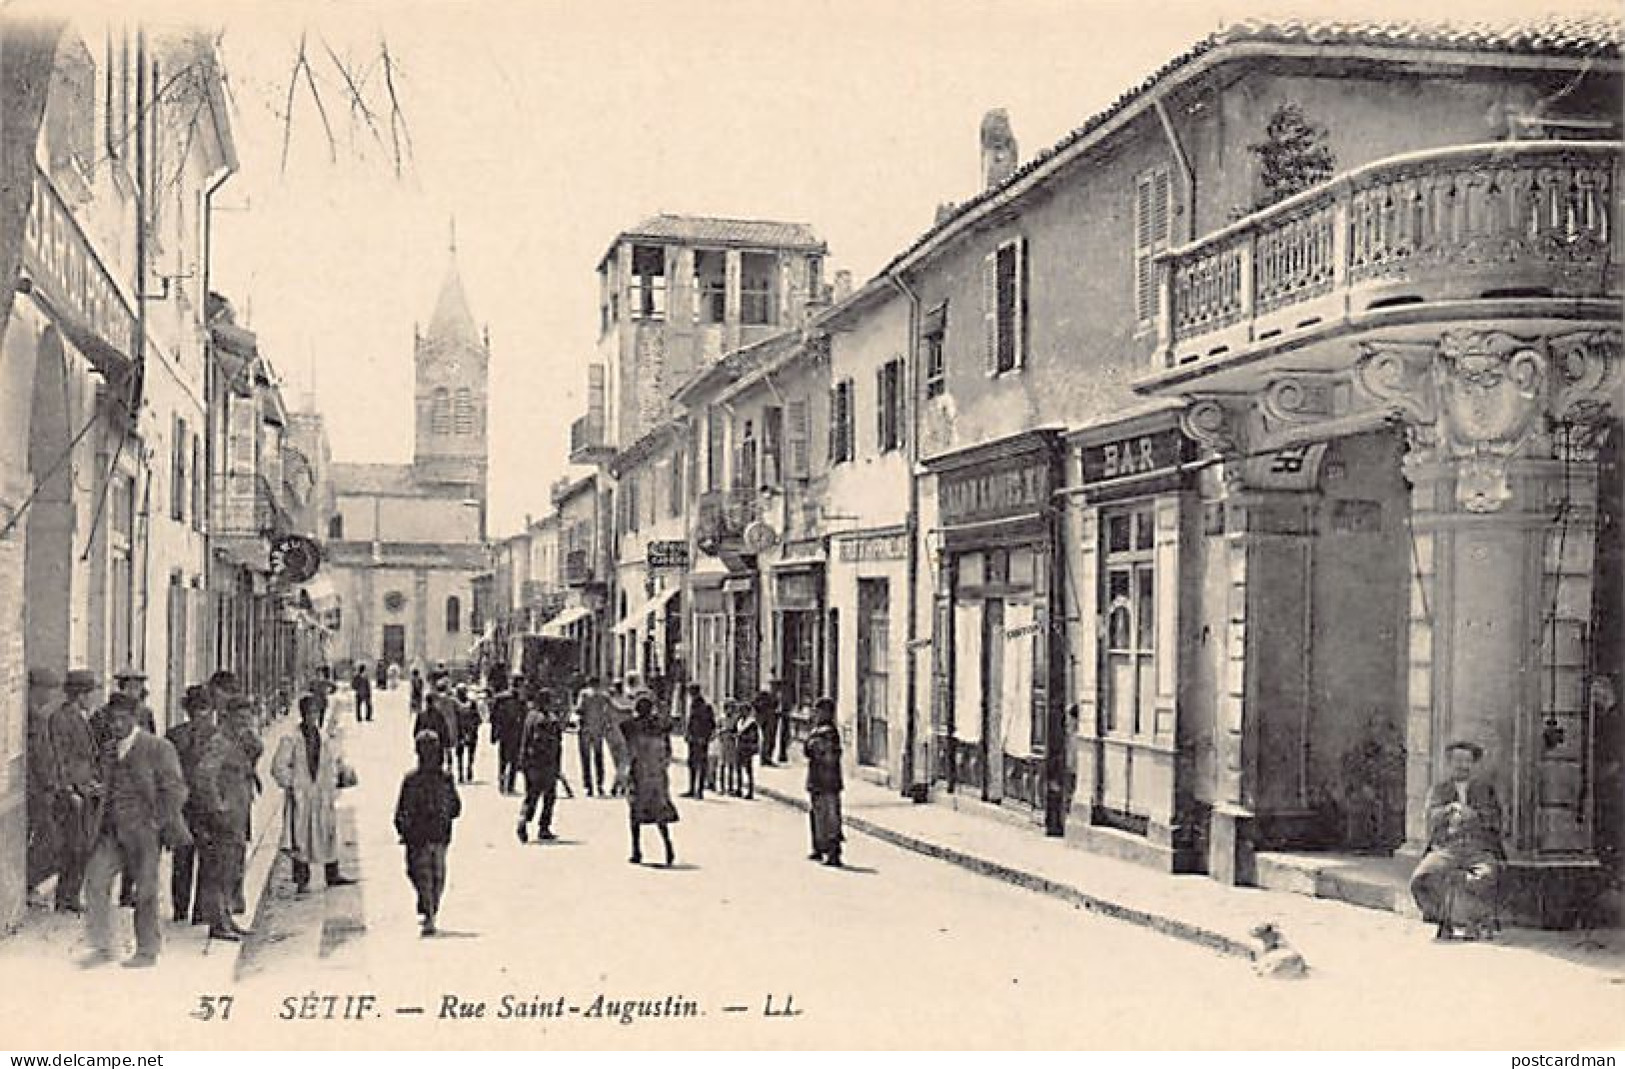 SETIF - Rue Saint-Augustin - Setif